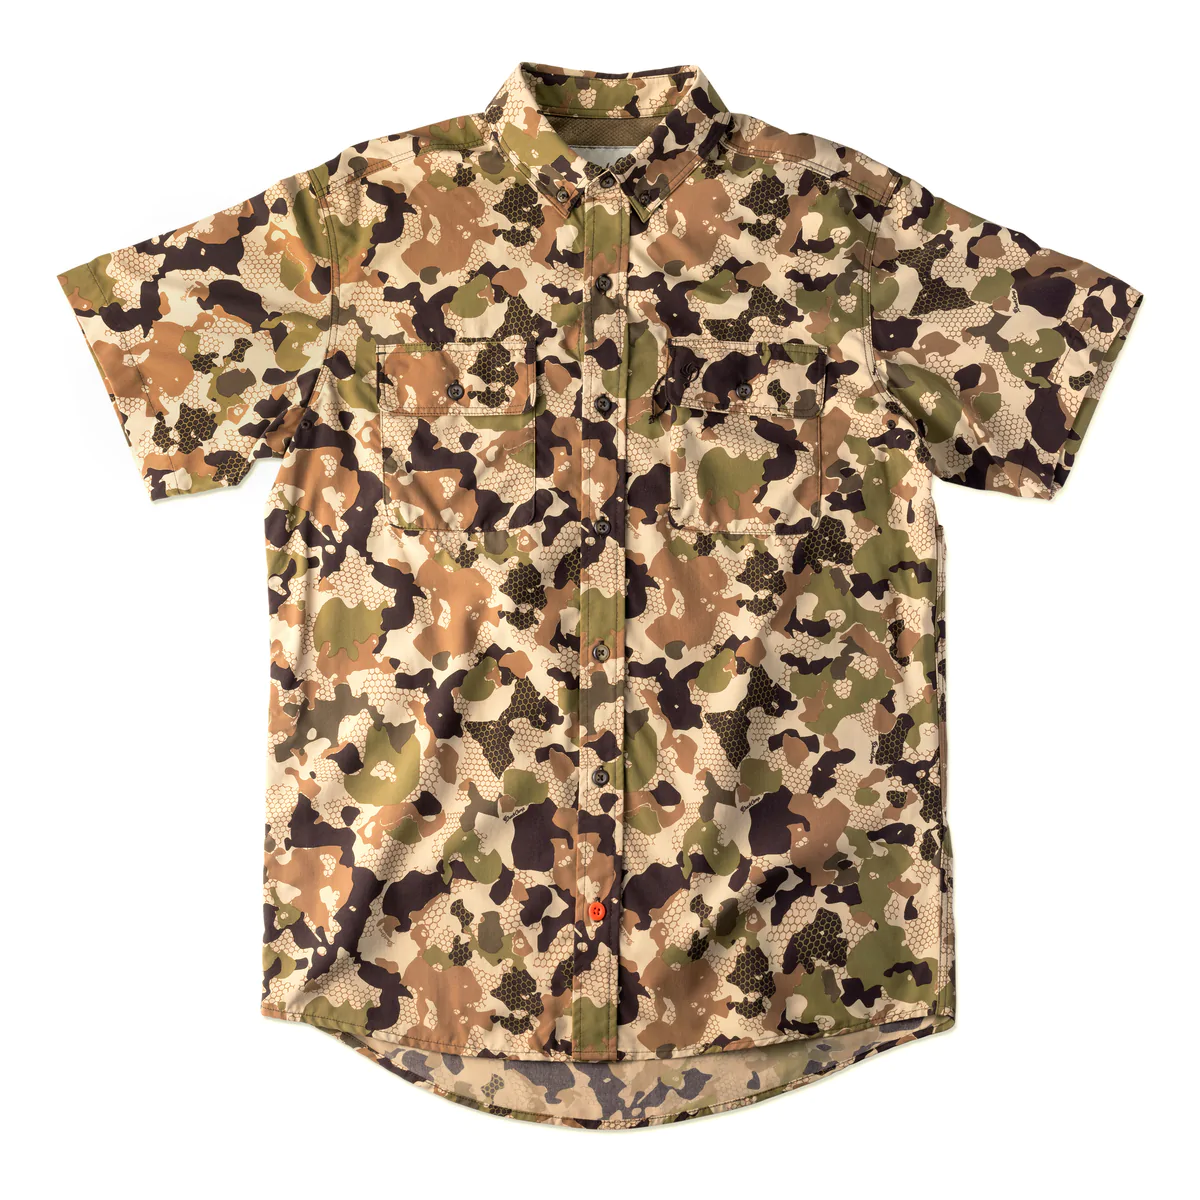 Lightweight Hunting Shirt - Short Sleeve